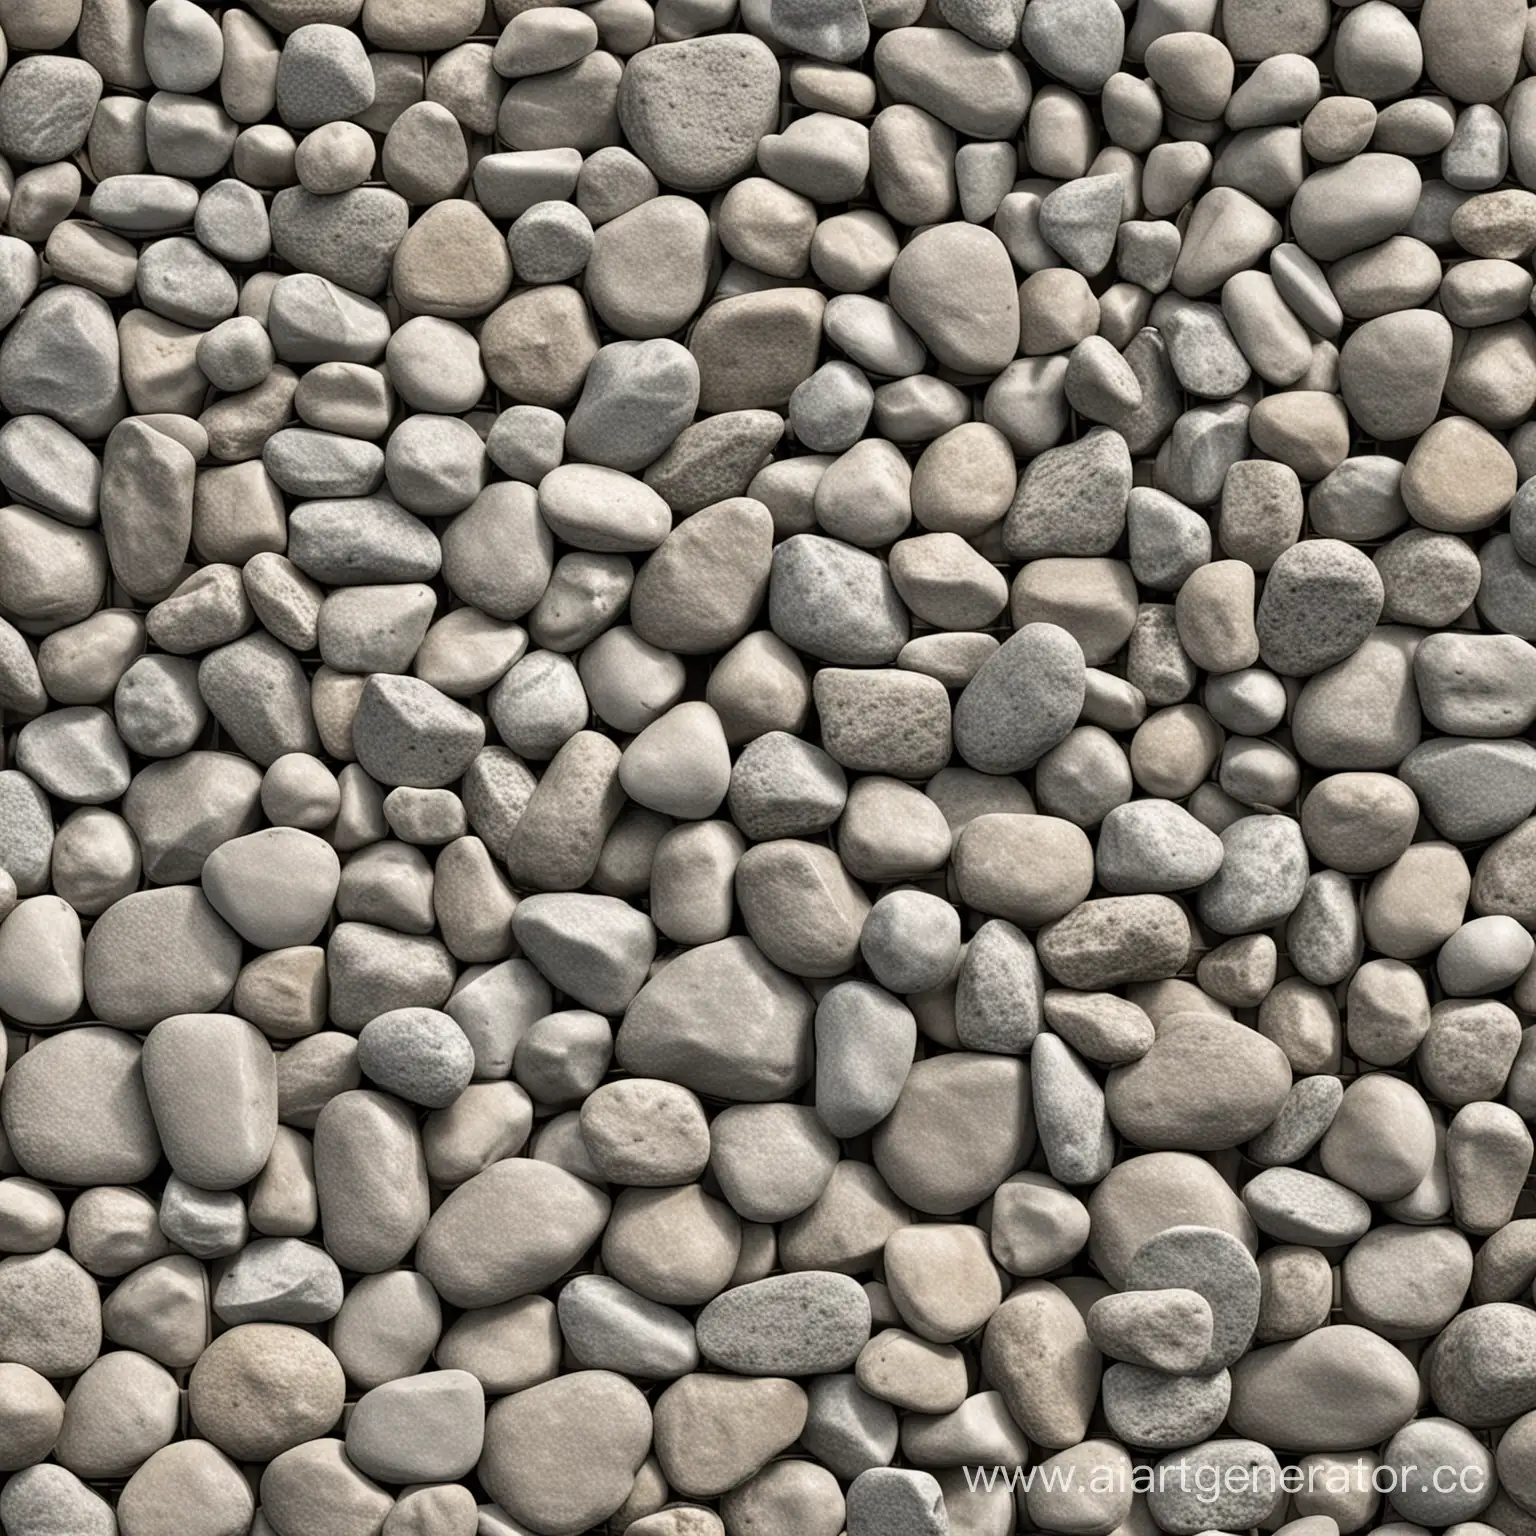 Varied-Stones-on-a-Conveyor-Belt